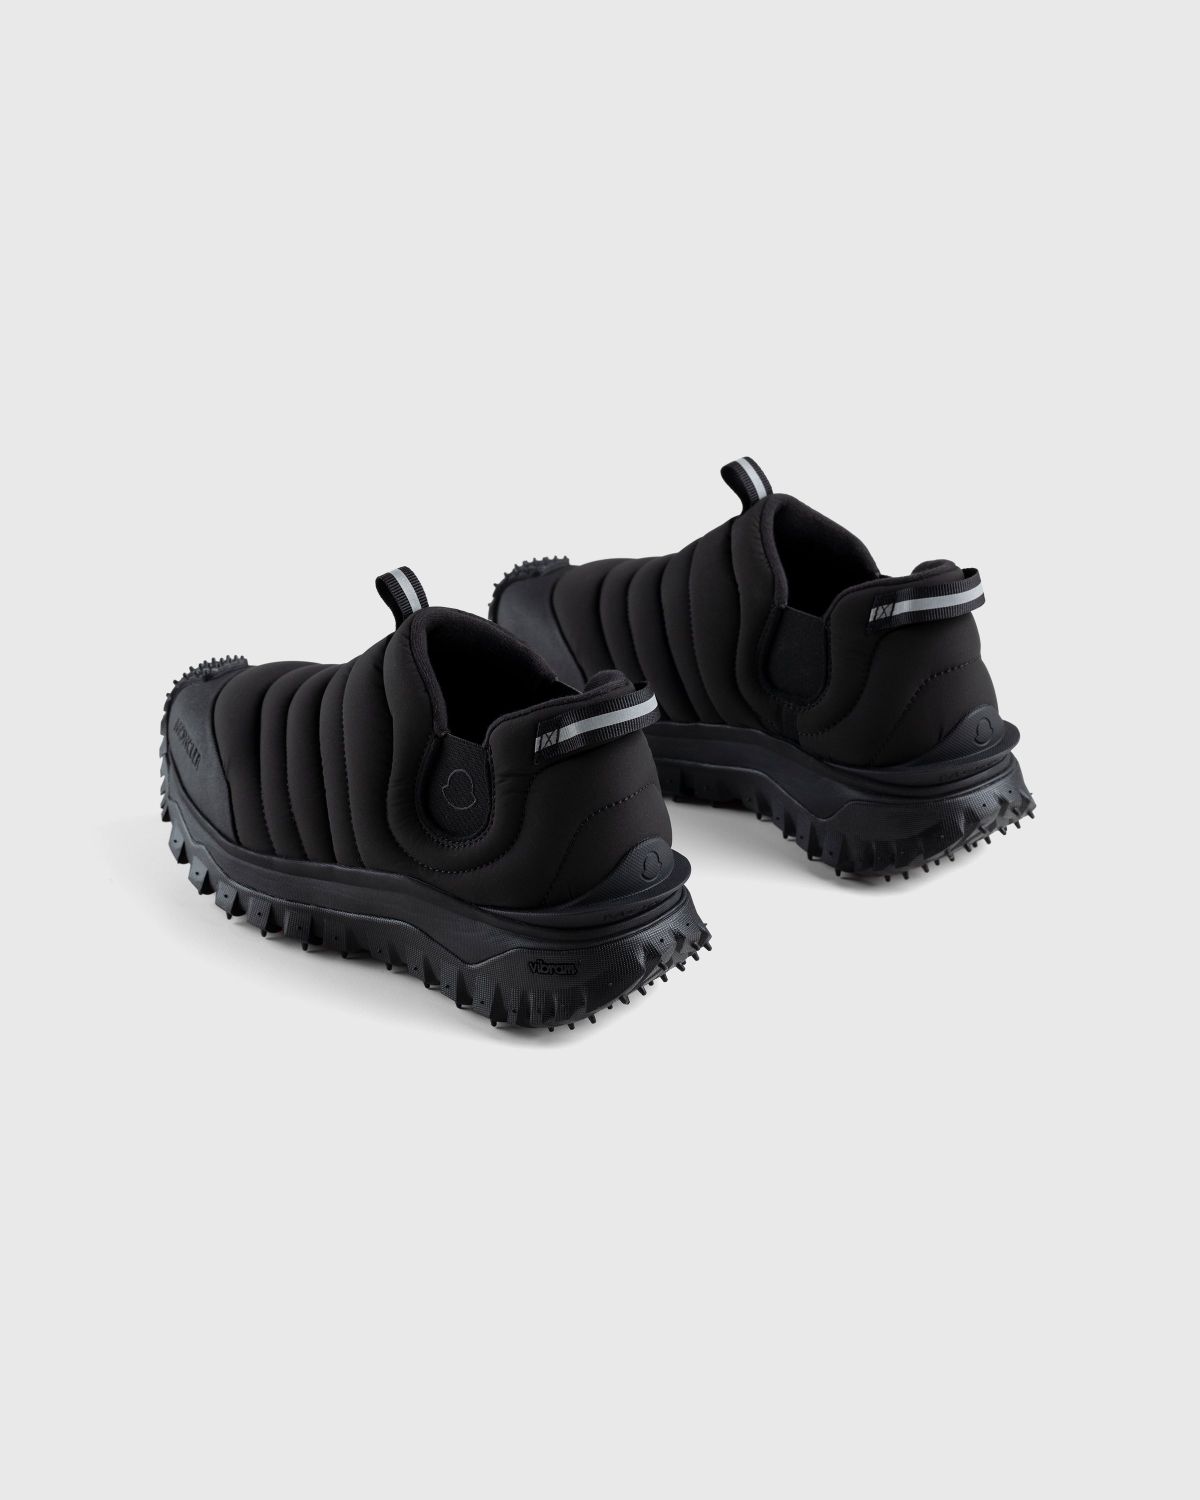 Moncler – Après Trail Sneakers Black - Sneakers - Black - Image 4